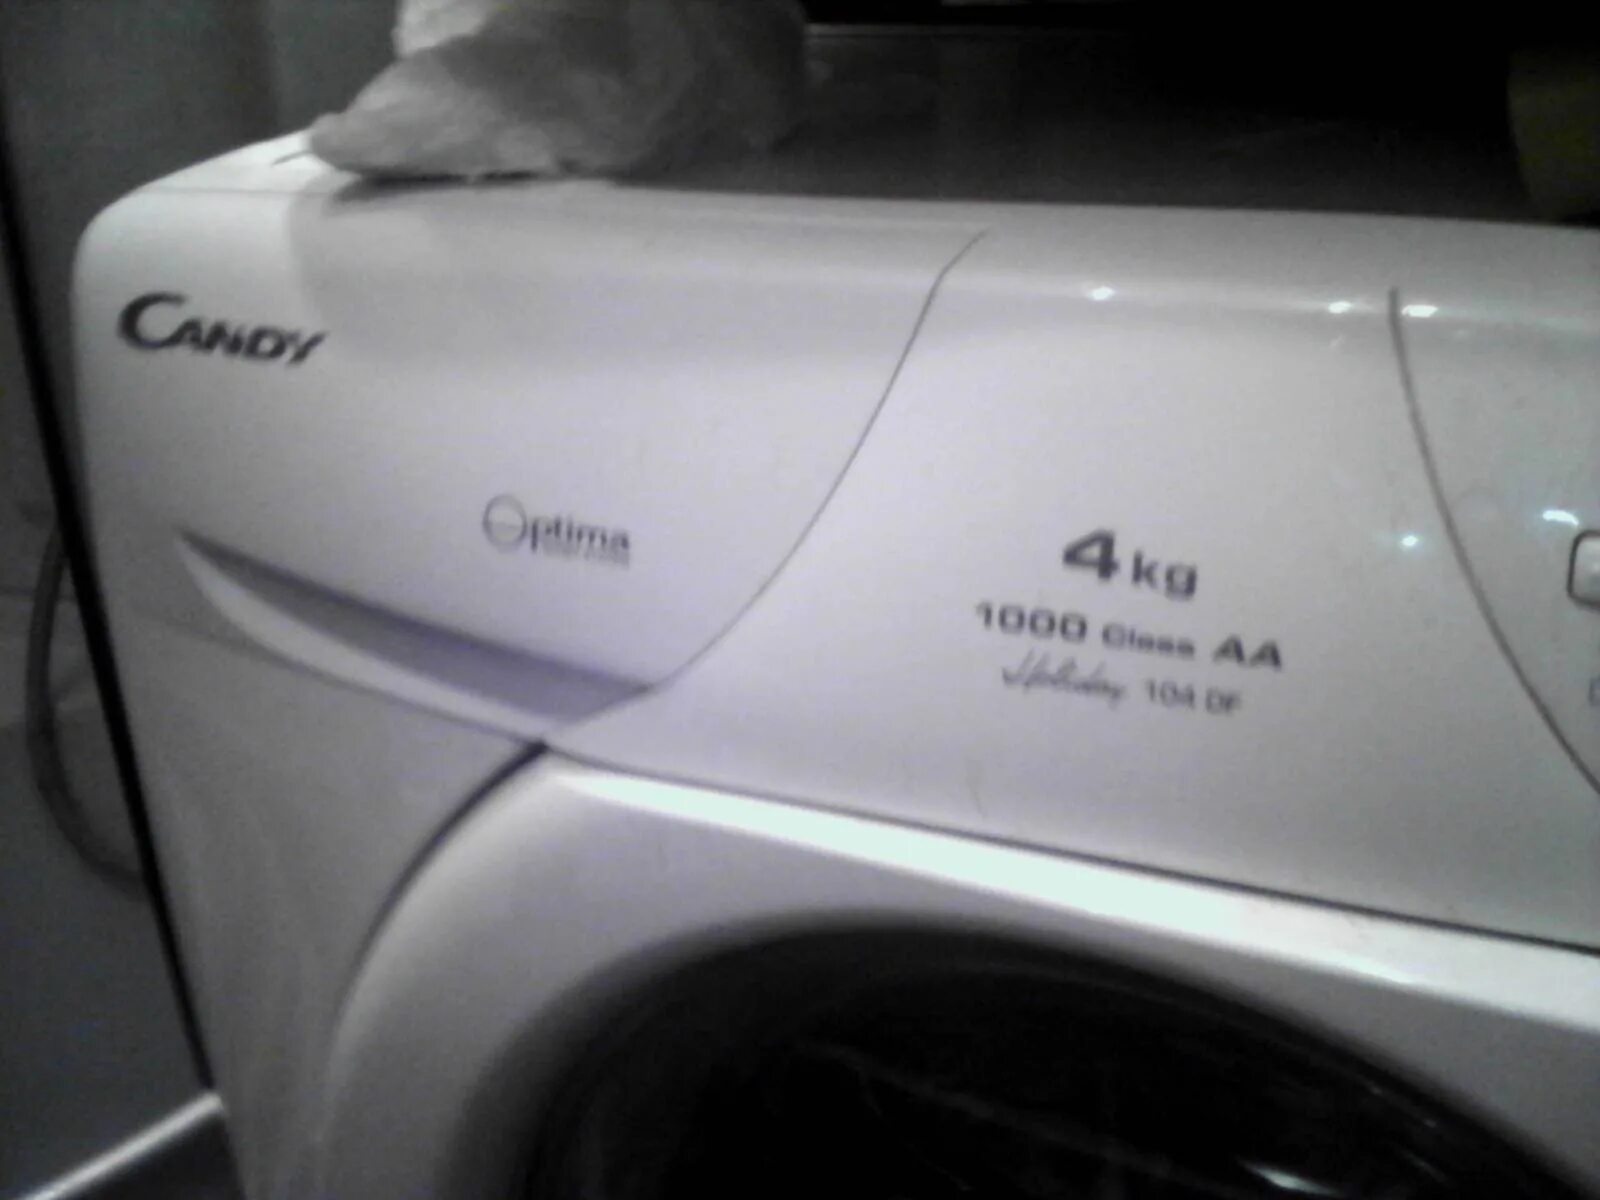 Candy Optima 104f. Candy Optima Wash System 104f. Стиральная машина Candy Optima Wash System. Стиральная машина Канди Holiday 104f. Канди оптима